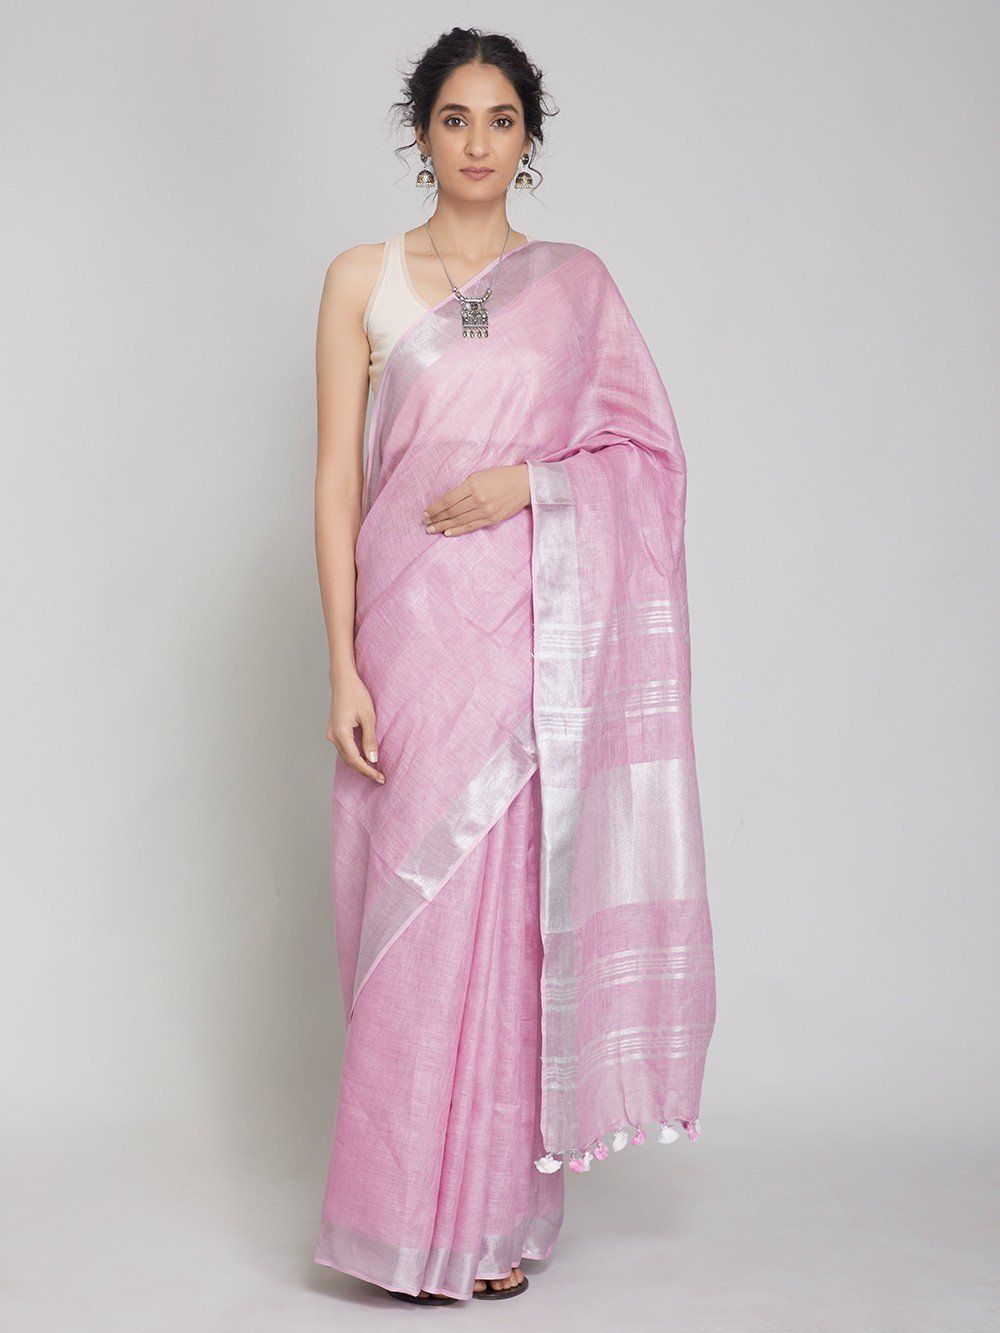 Details more than 70 pink linen saree super hot